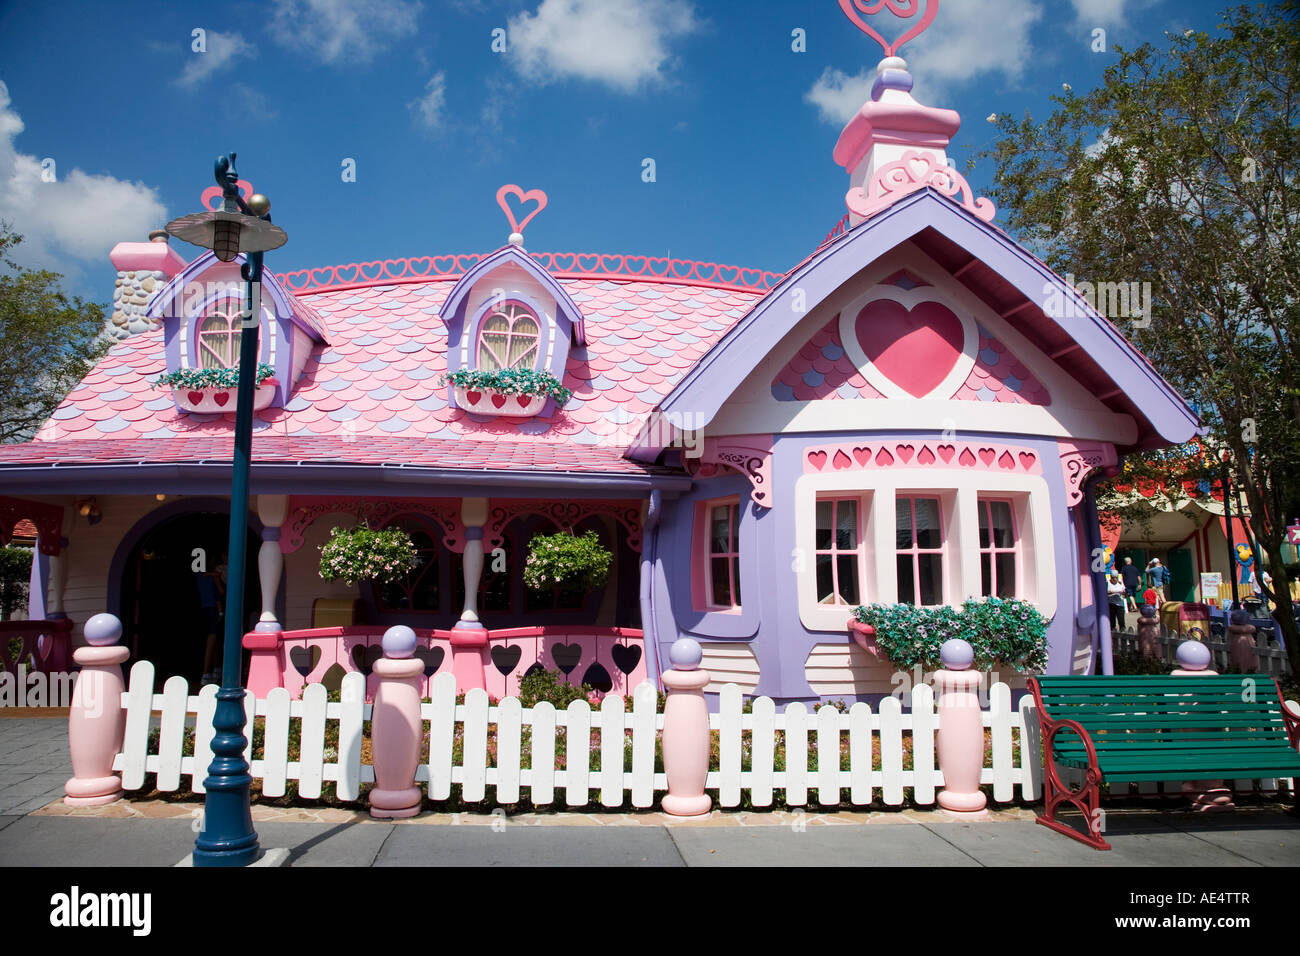 La Maison de Minnie - Disney | Beebs